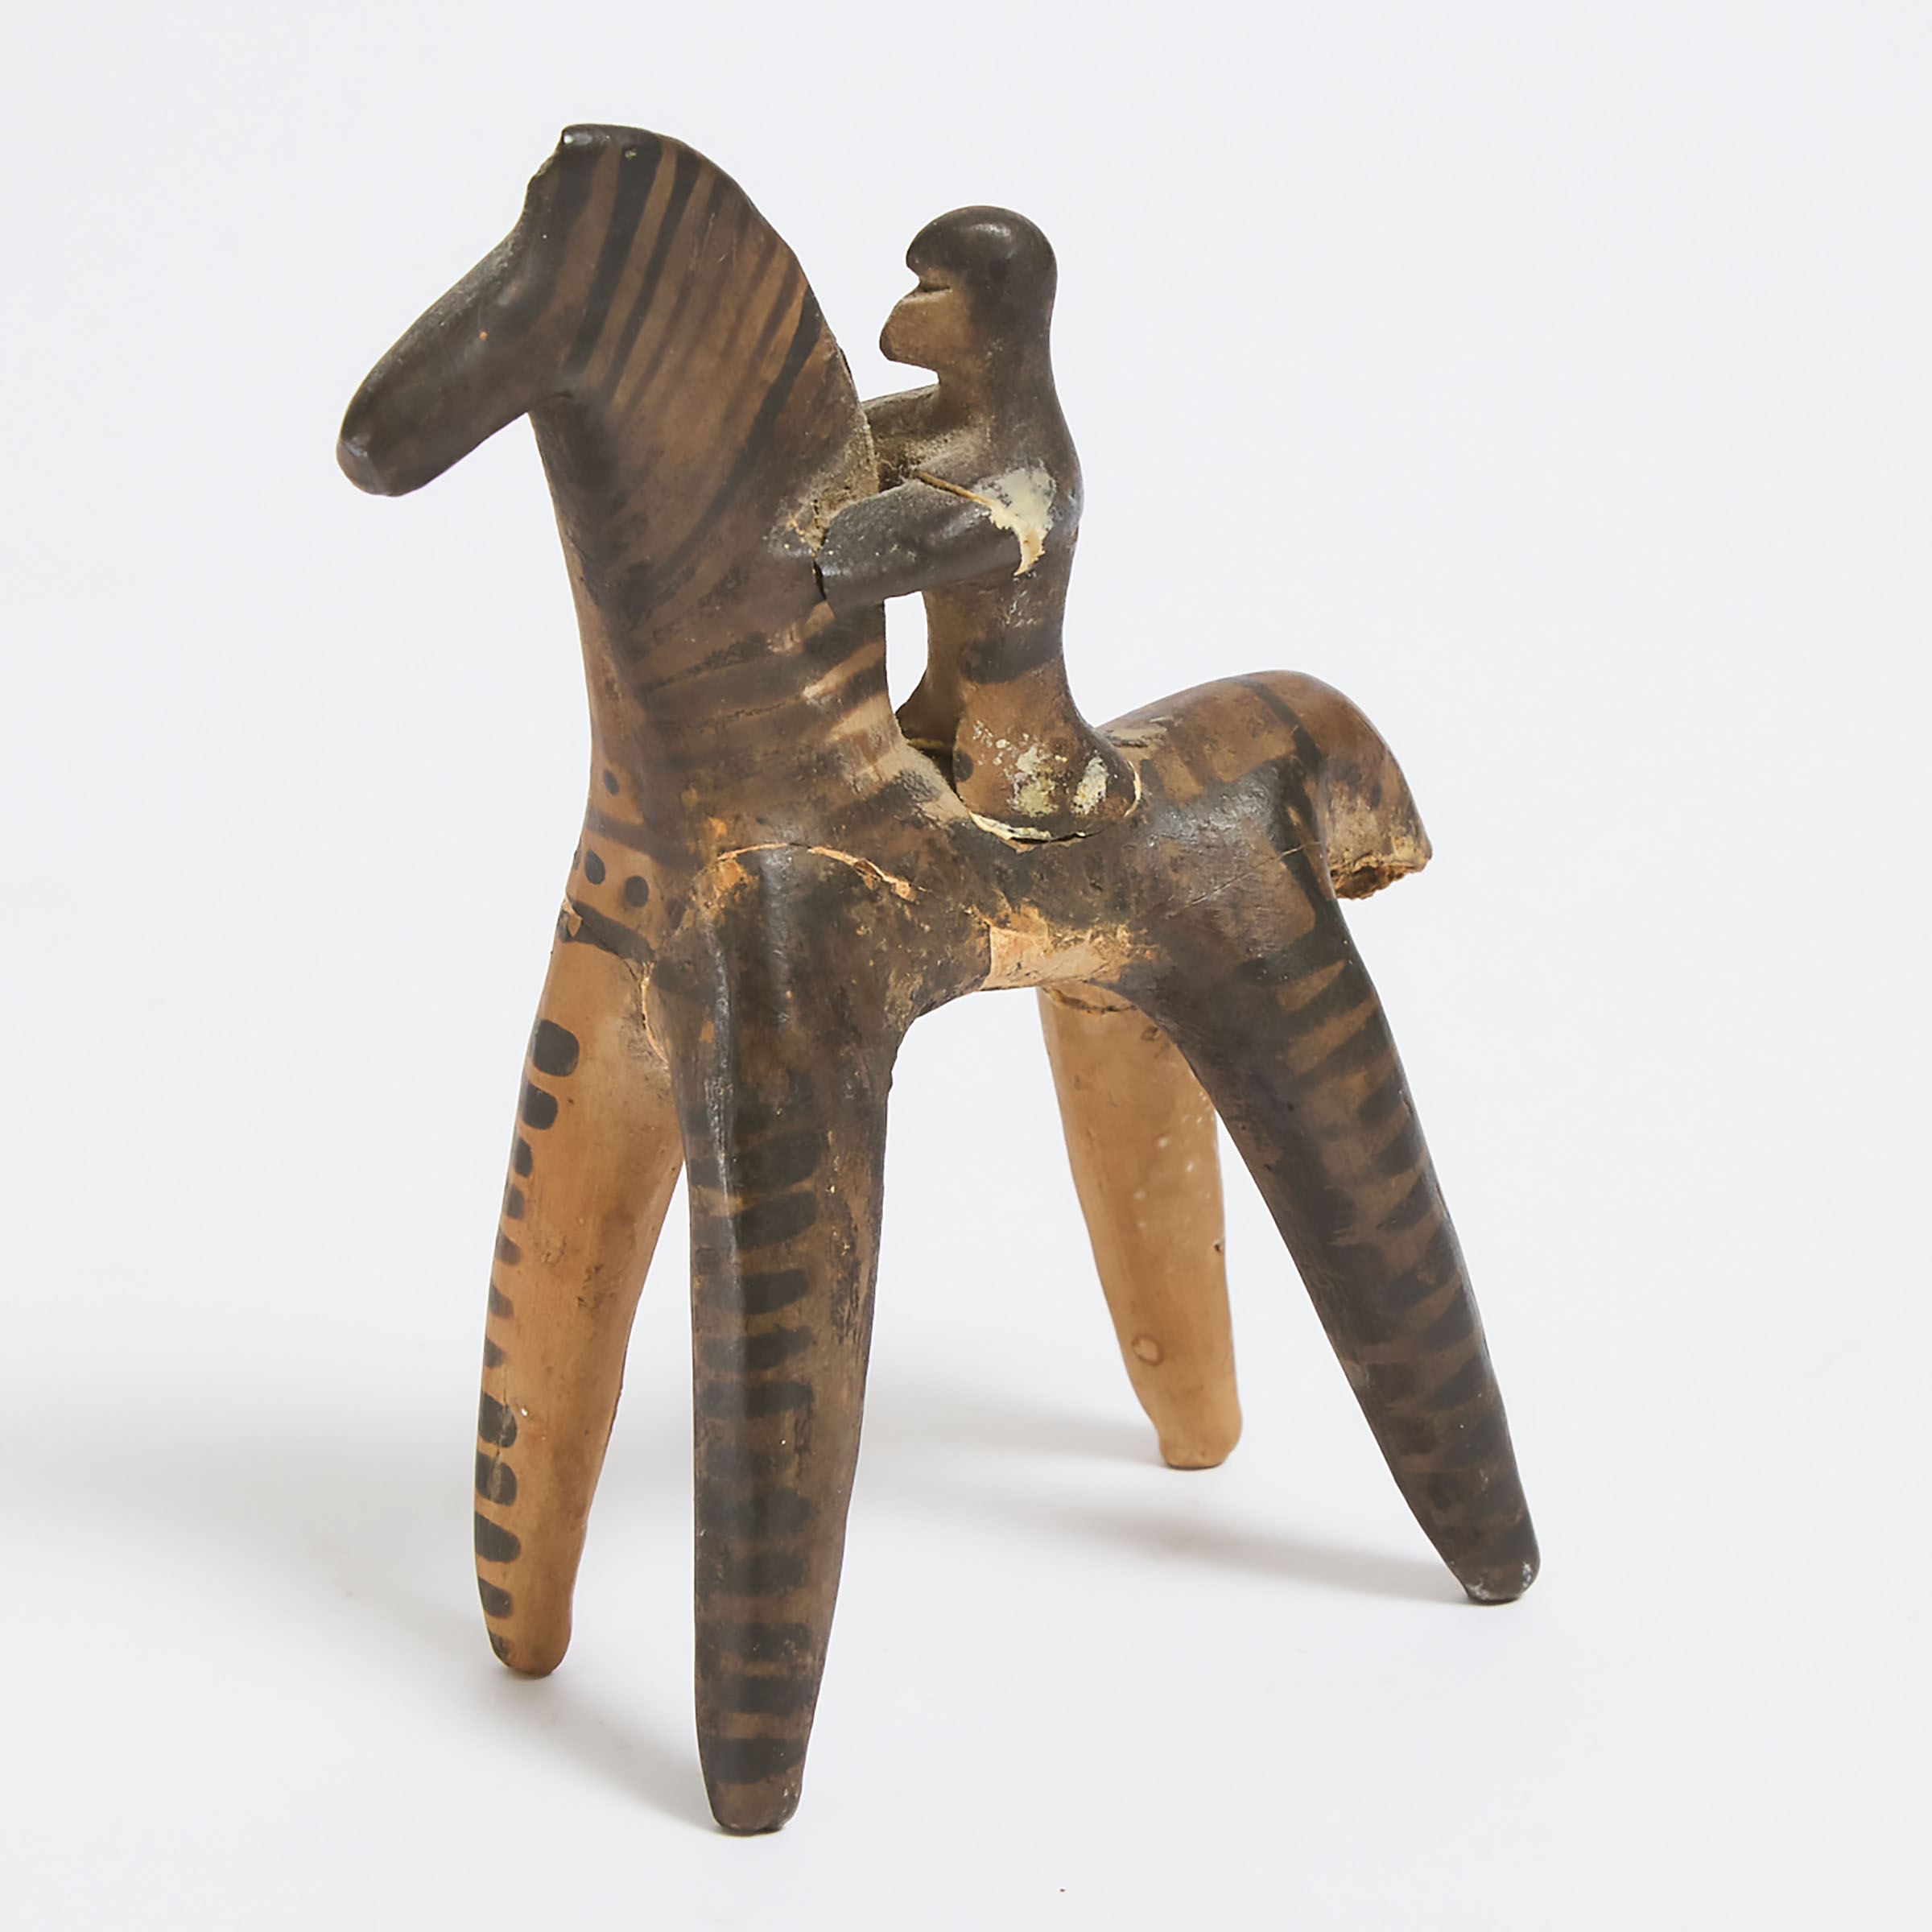 Boeotian Bichrome Terra Cotta Horse and Rider, Greece, Archaic Period, 6th century B.C.